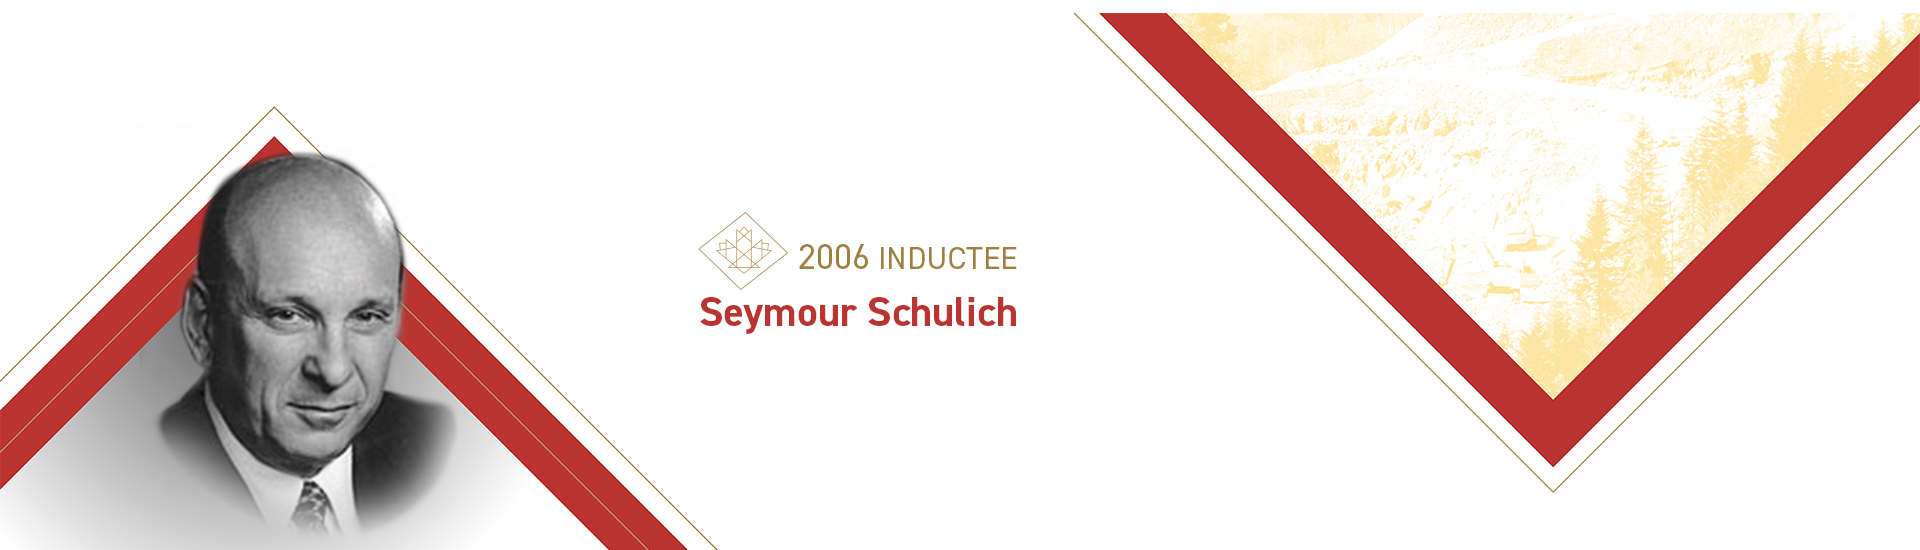 Seymour Schulich (b. 1940)